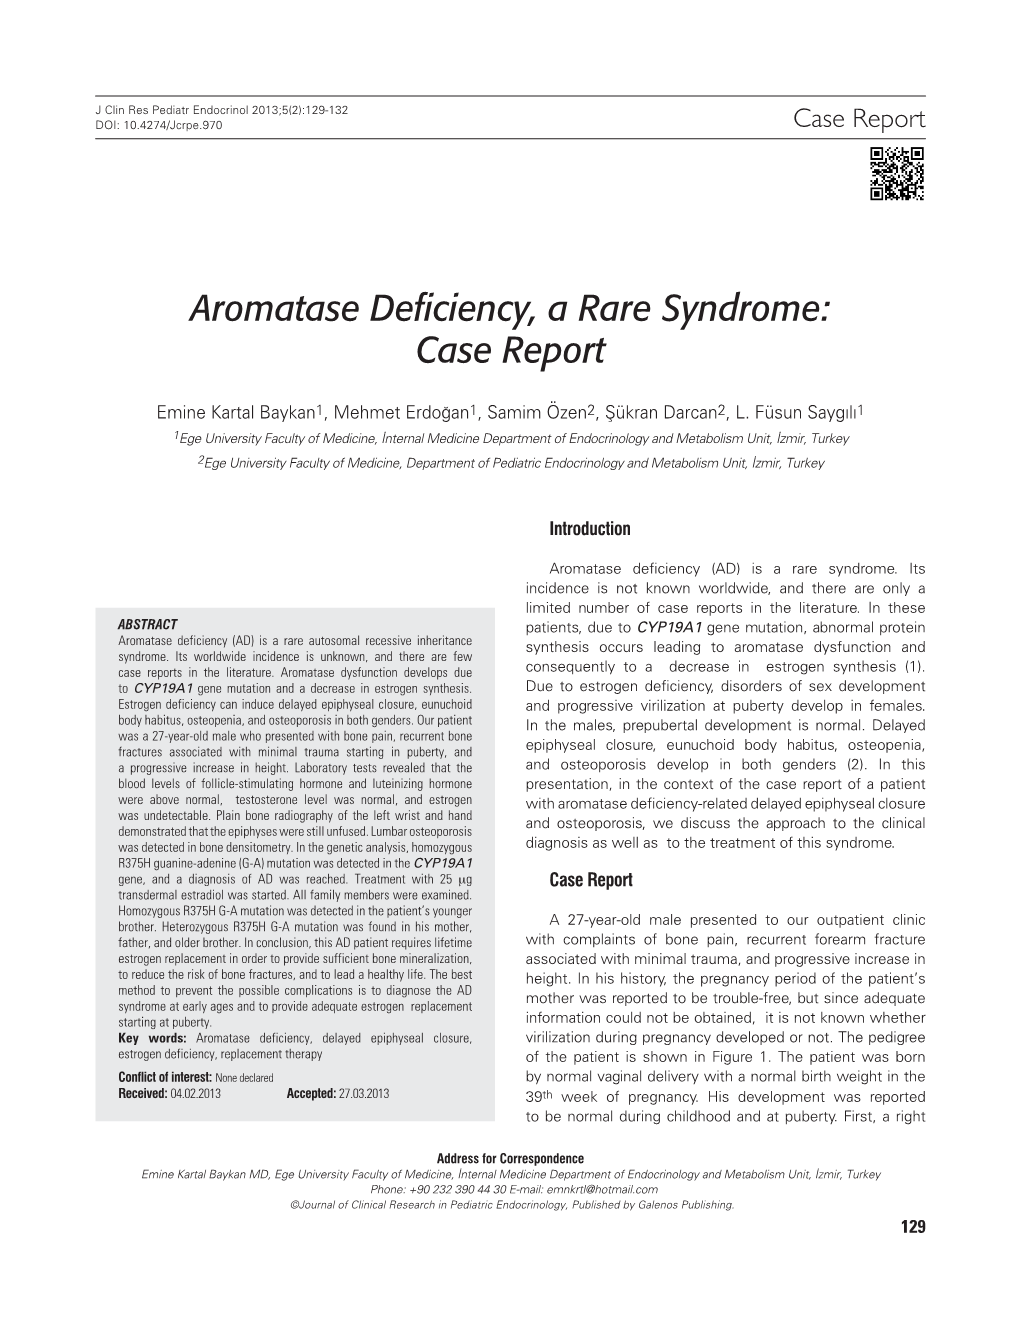 Aromatase Deficiency, a Rare Syndrome: Case Report